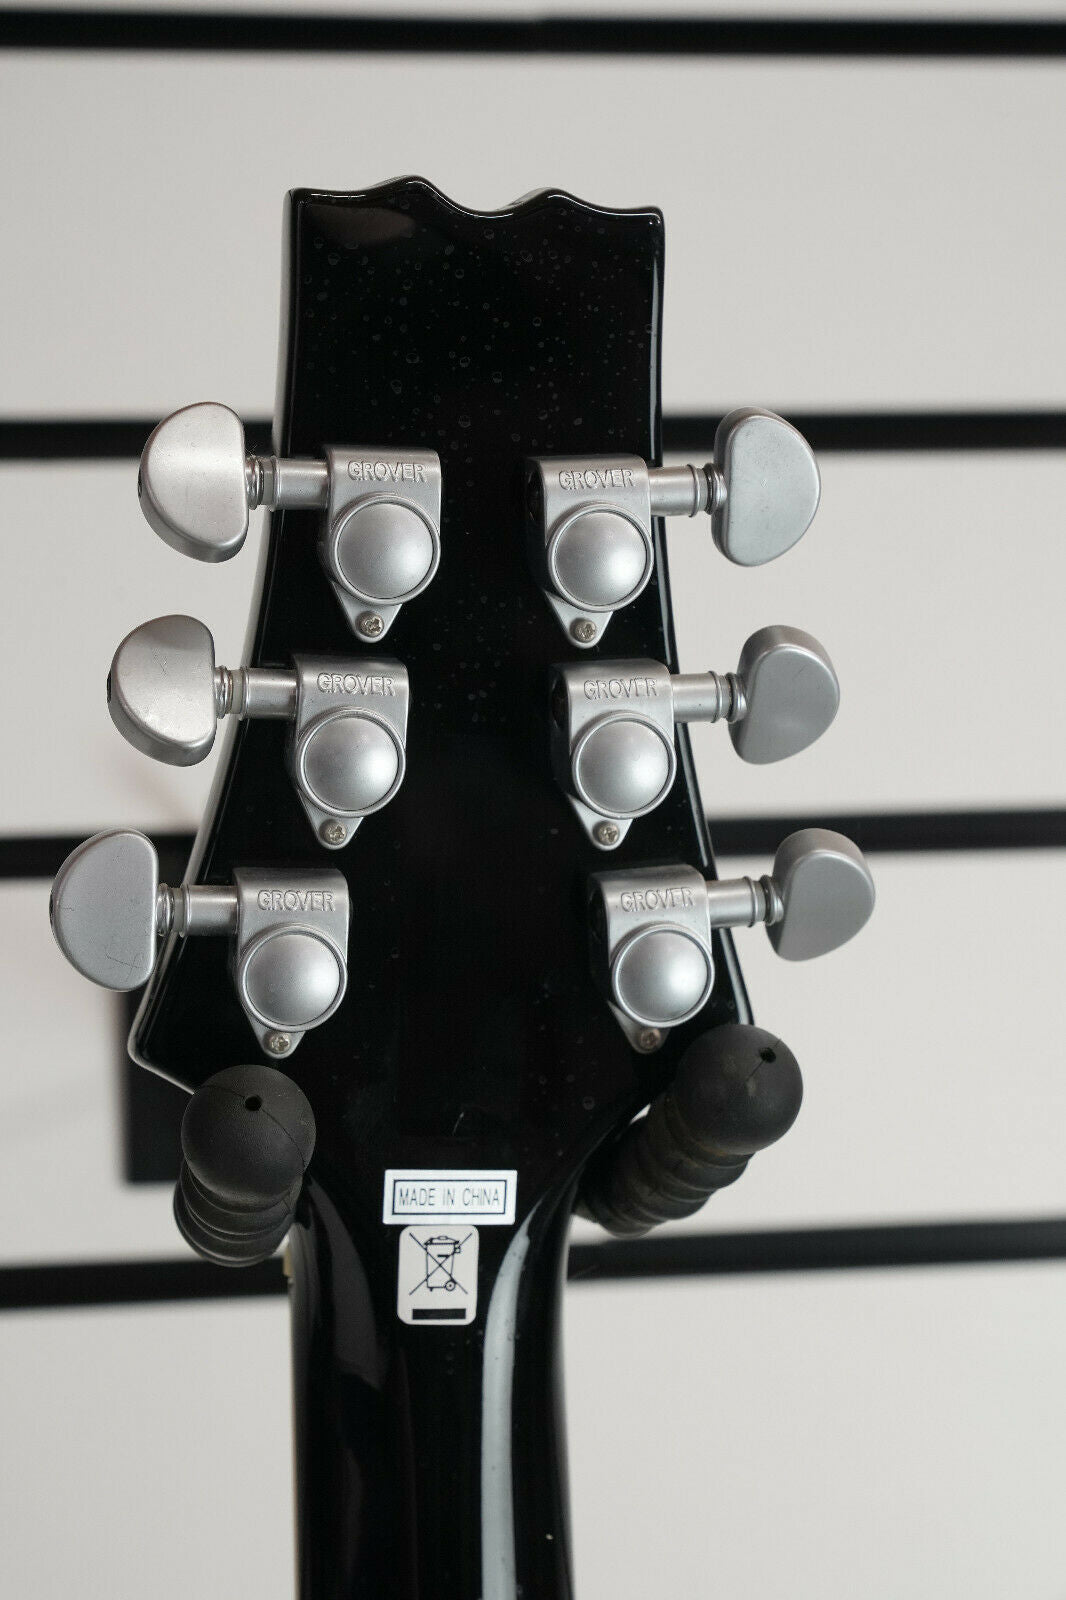 Shine Super Strat Electric Guitar Black Burst Humbucker Pickups Set Neck